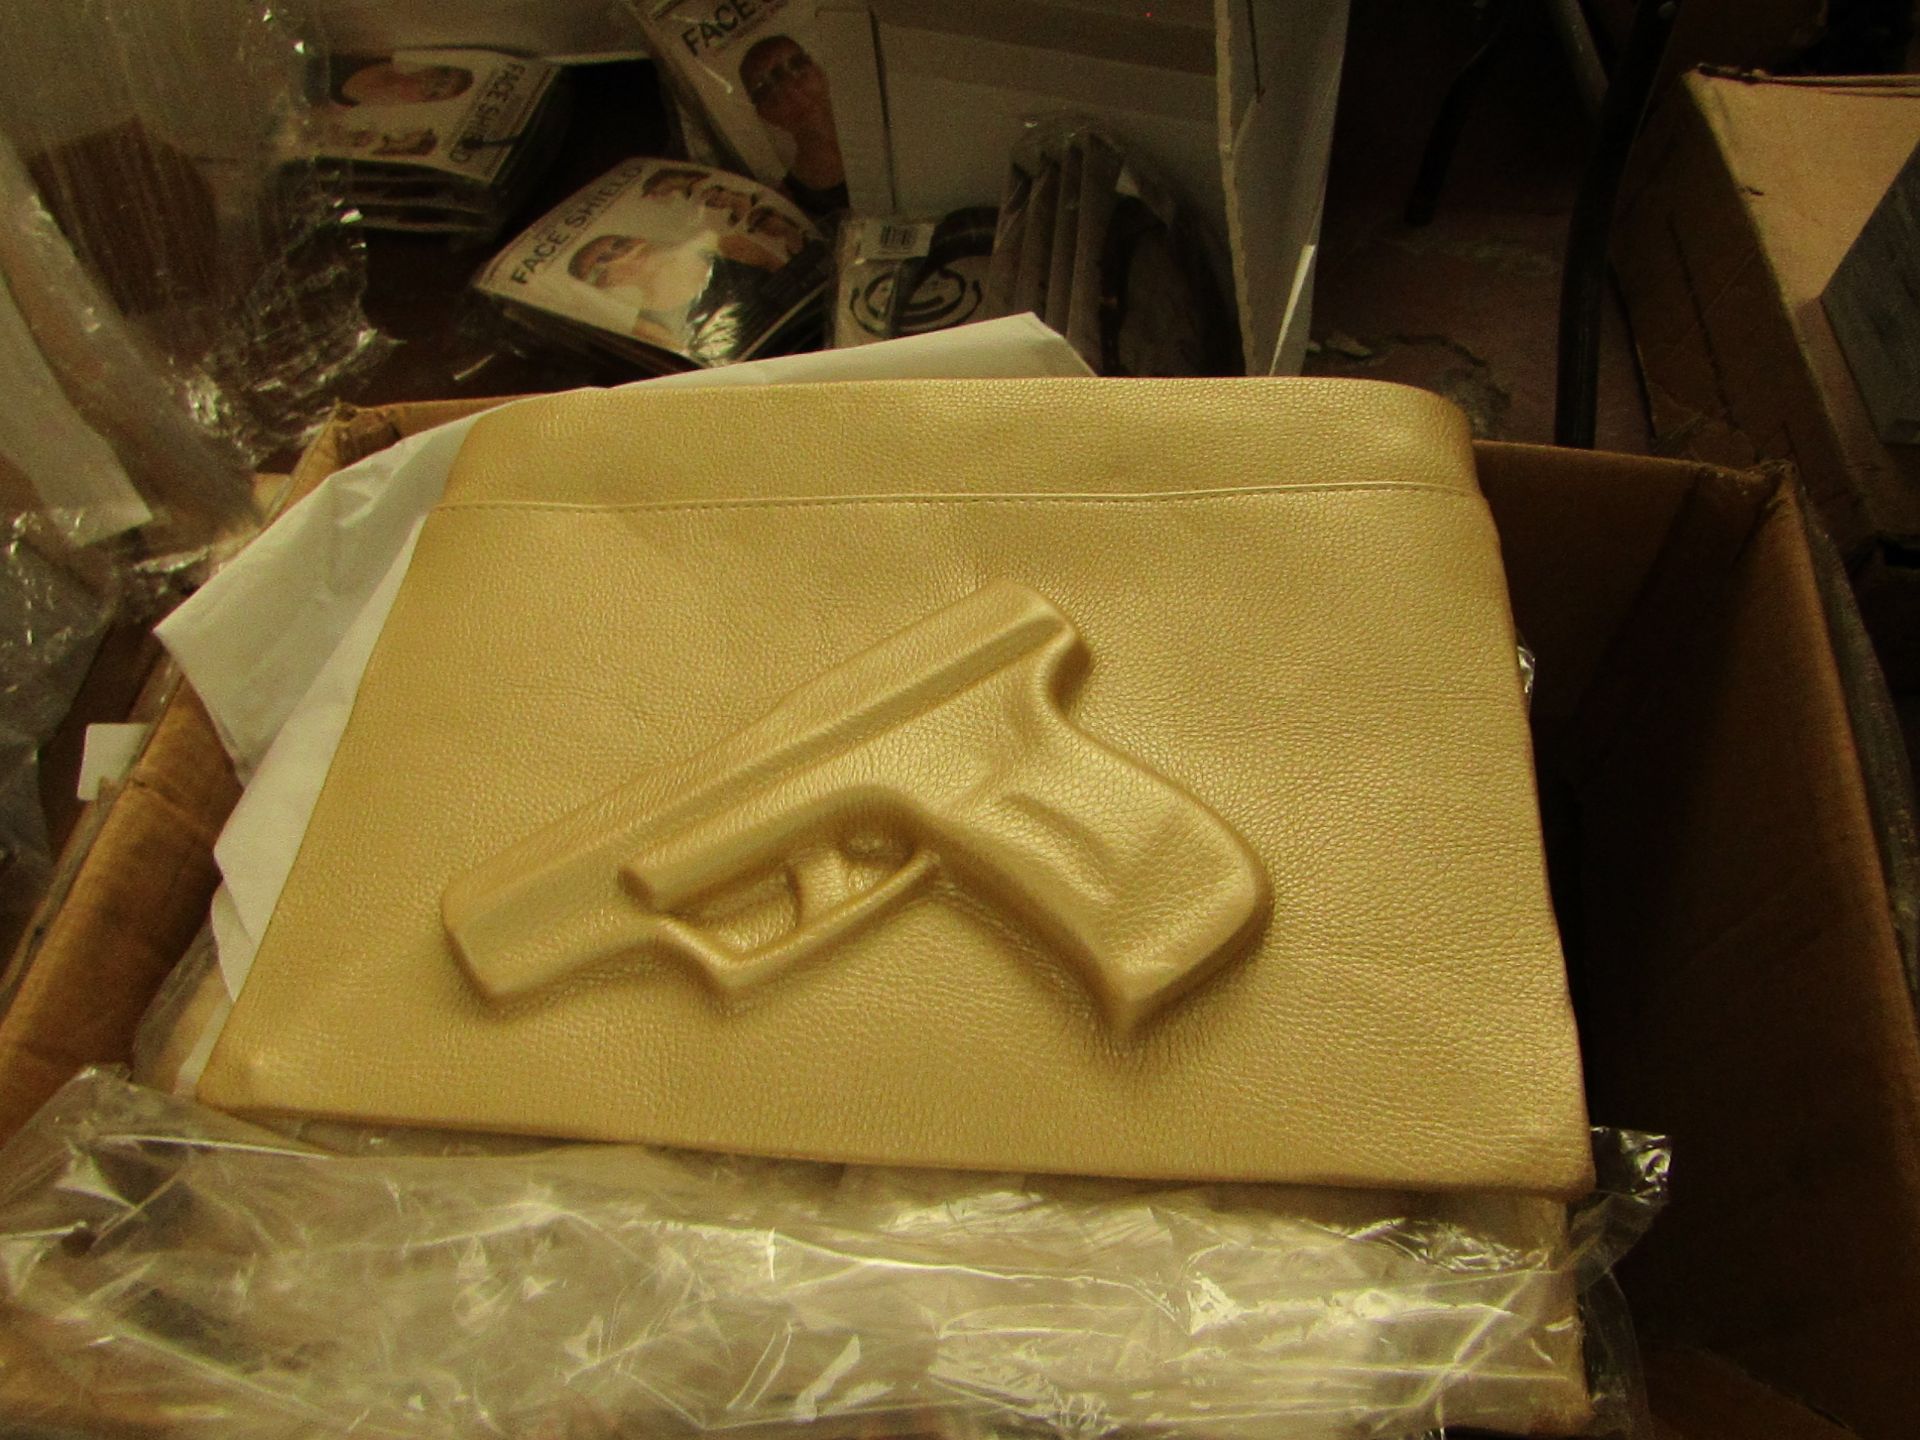 10x Queendom - Ladies Gun Style Purse / Handbag (Metallic Gold ) - Unused & Packaged.